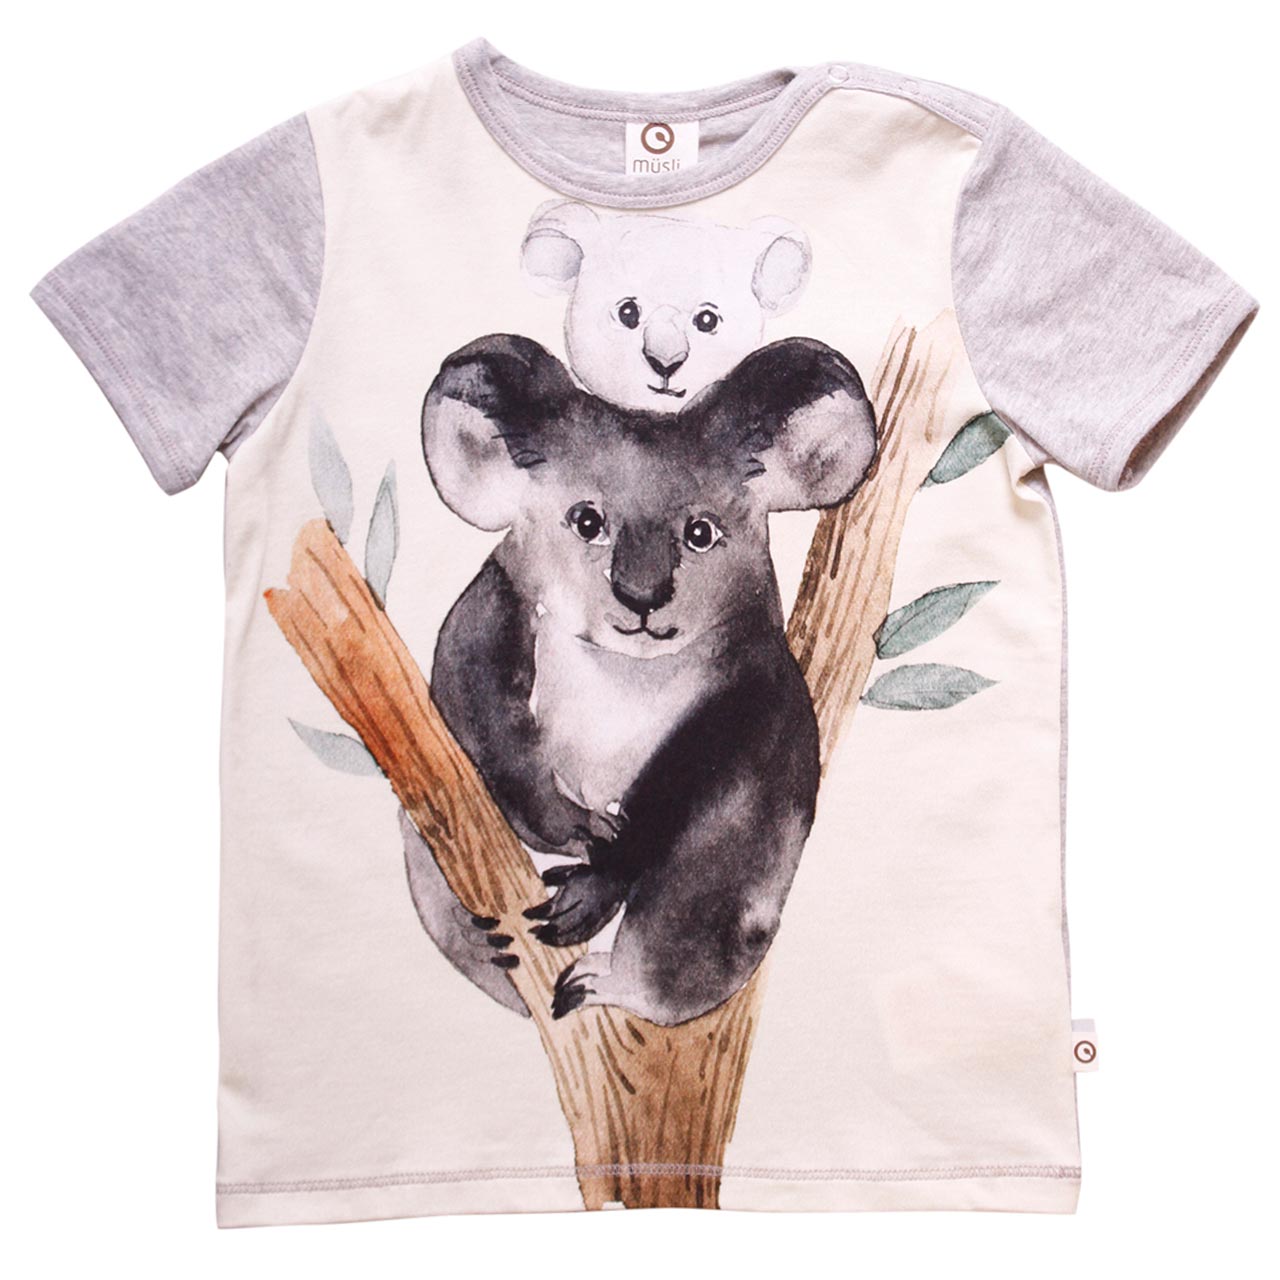 Cooles T-Shirt Koala Design in hellgrau